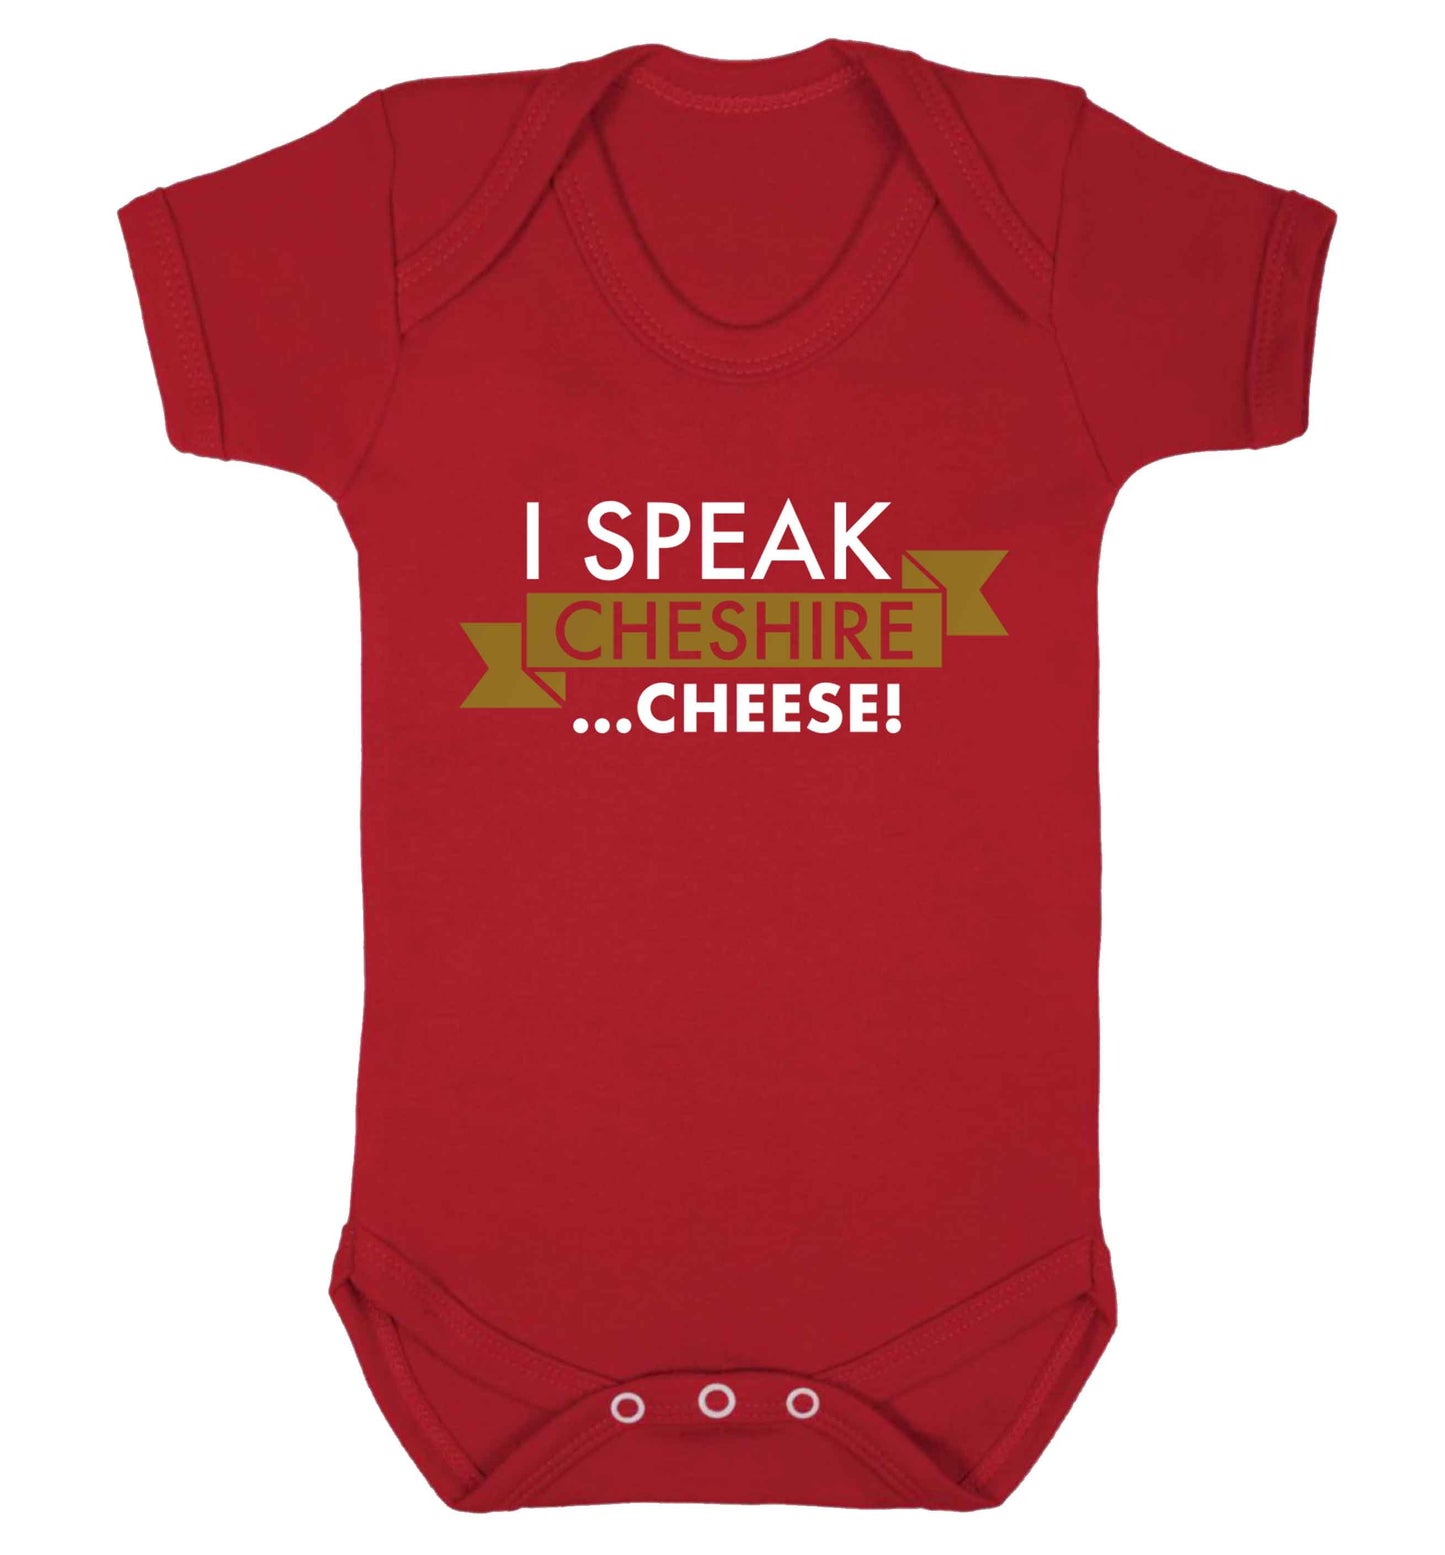 I speak Cheshire cheese Baby Vest red 18-24 months